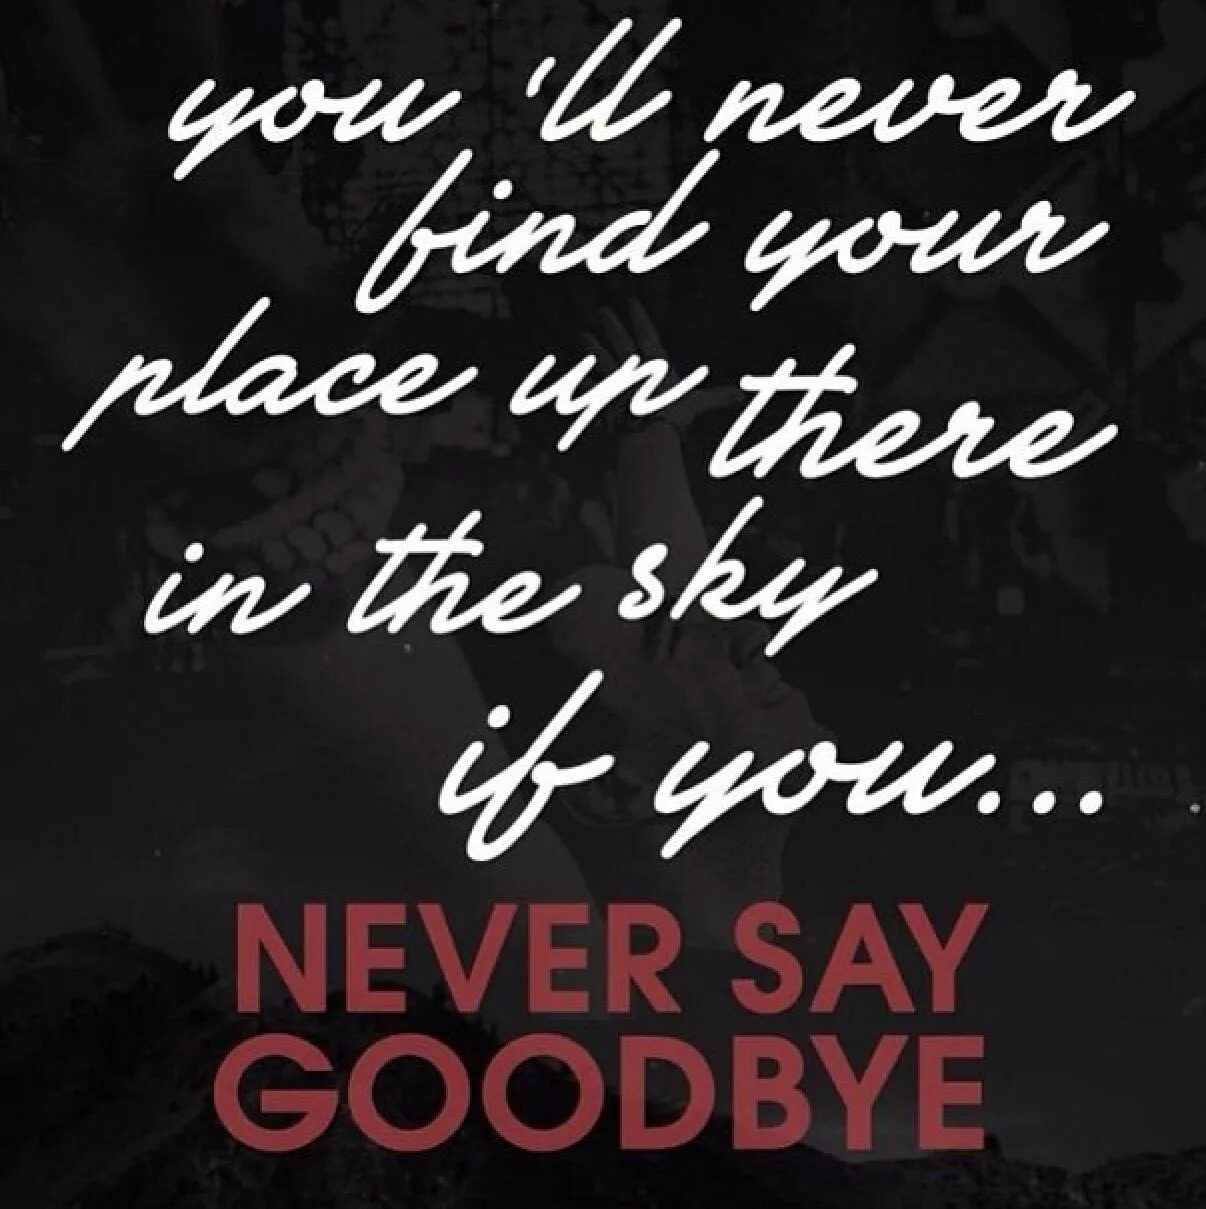 Say Goodbye. Never say. Hardwell Dyro never say Goodbye. Never Goodbye.